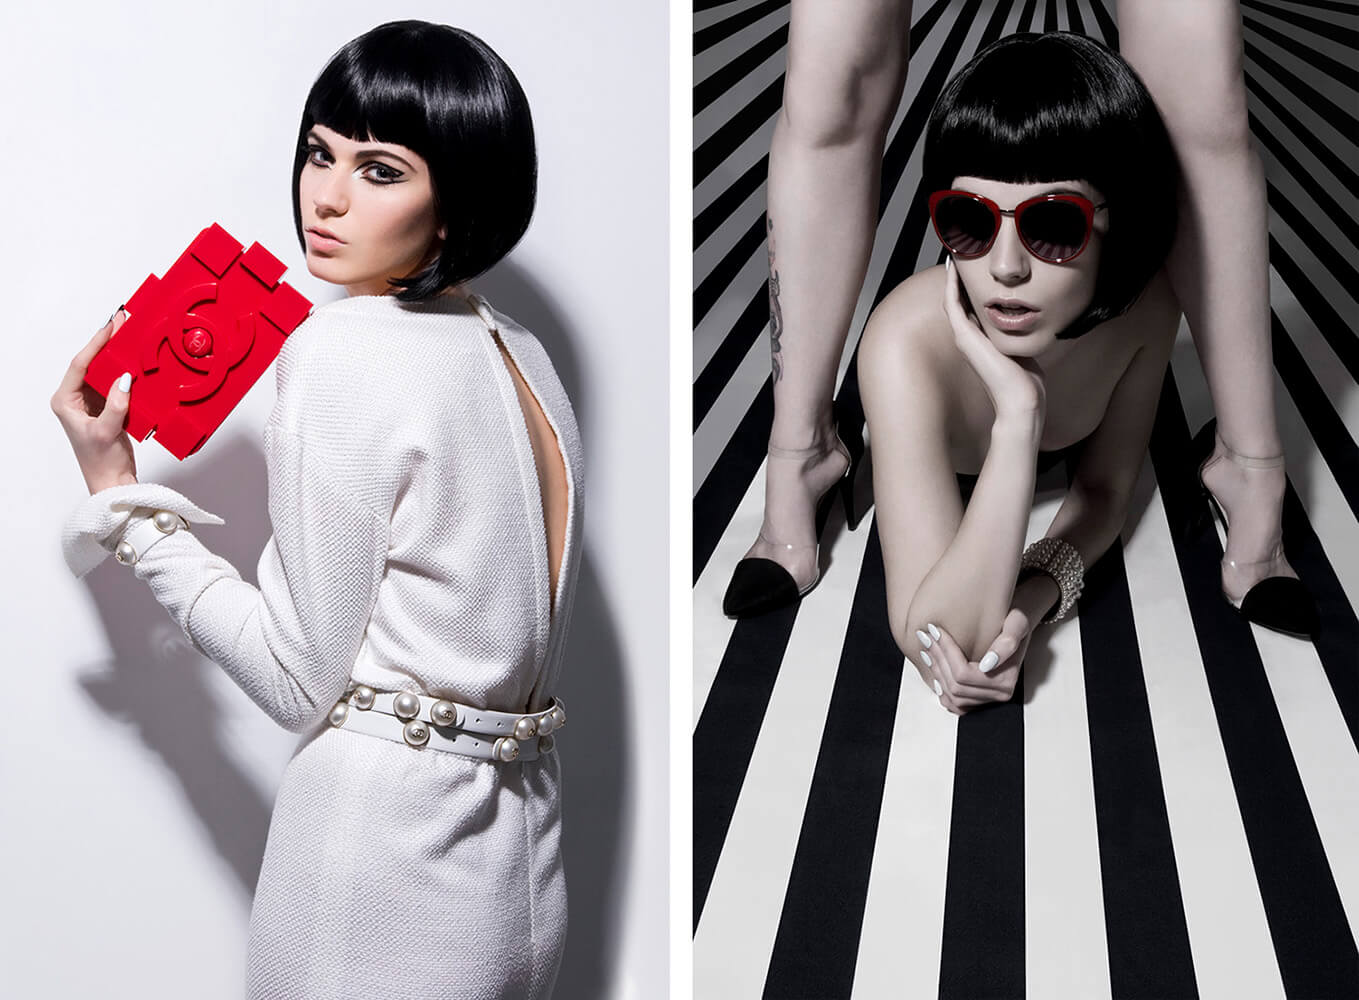 Angel-Ruiz-Ruiz-Fashion-Photographer-editorial-Chanel-Spring-Summer-2013-White-Dress-sunglasses-1359x1000